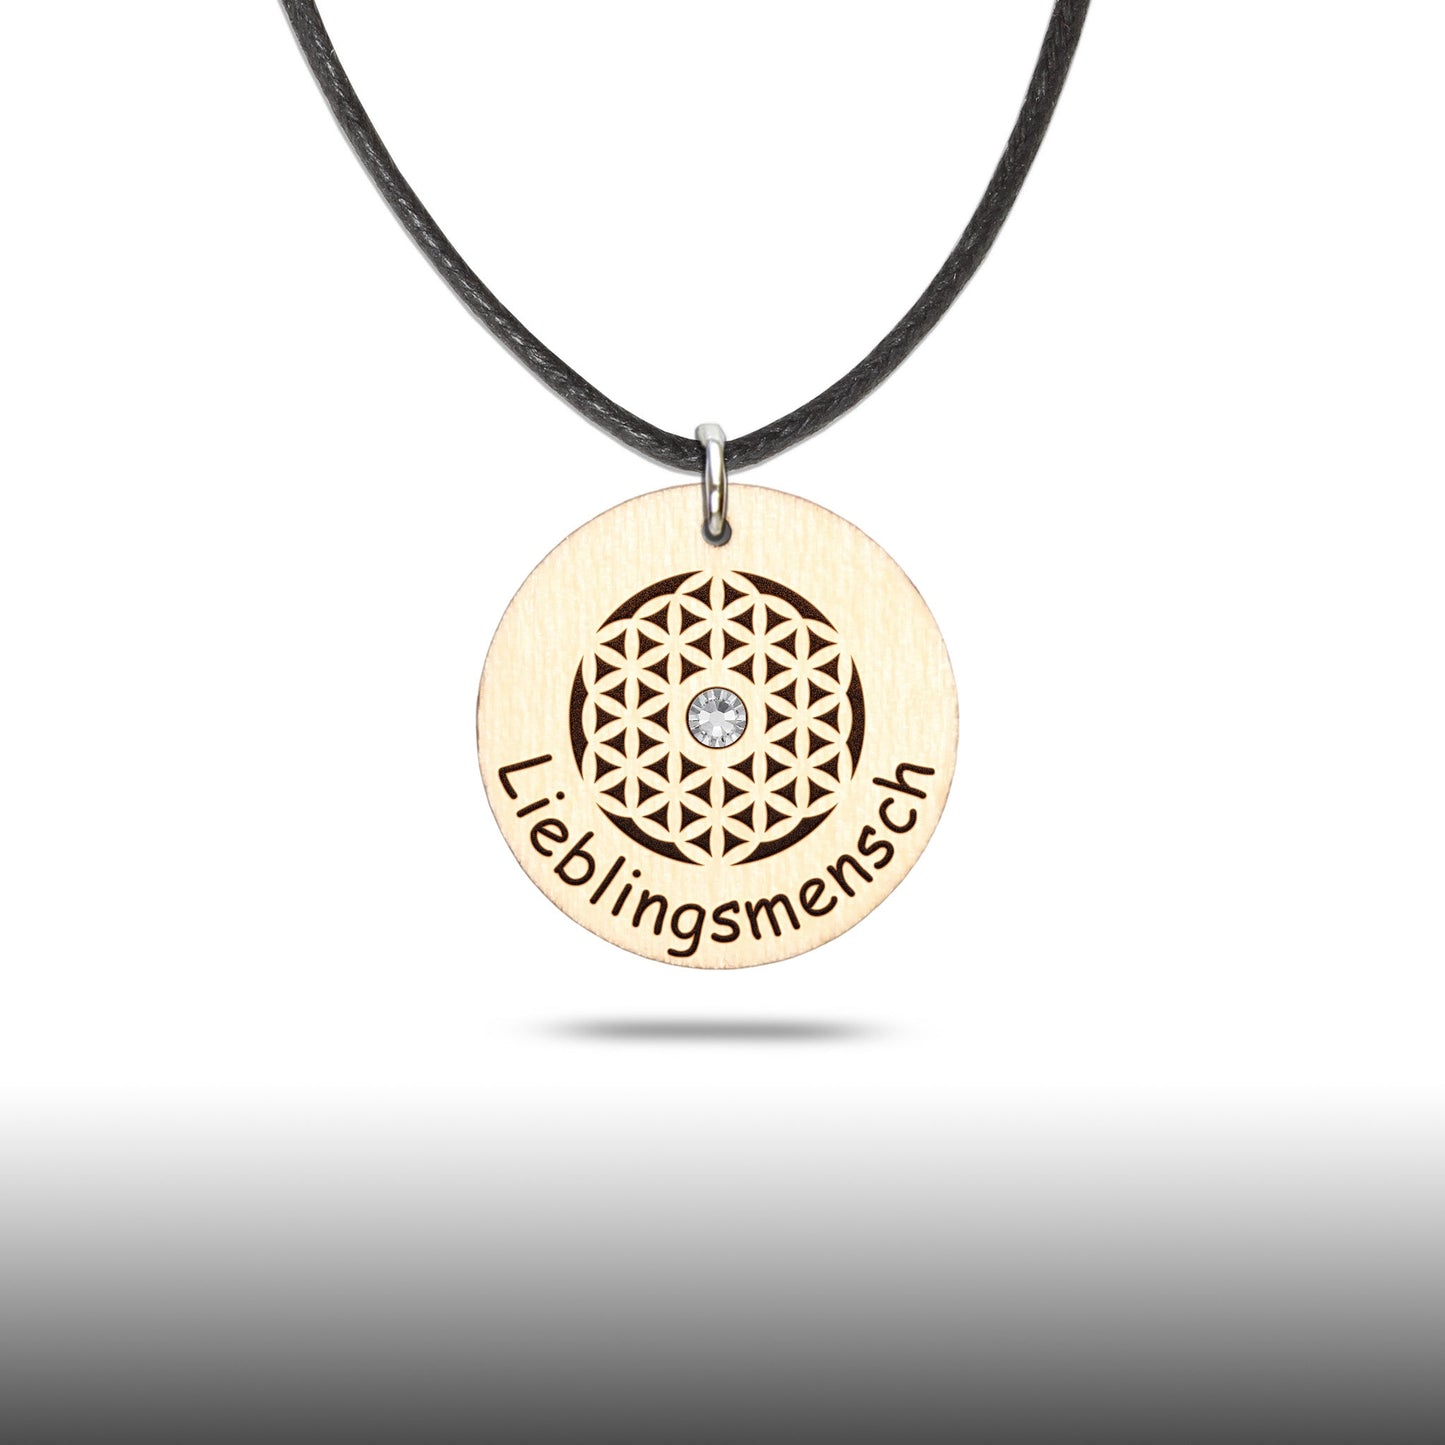 Halskette "Lieblingsmensch" - Nanino Design Onlineshop -